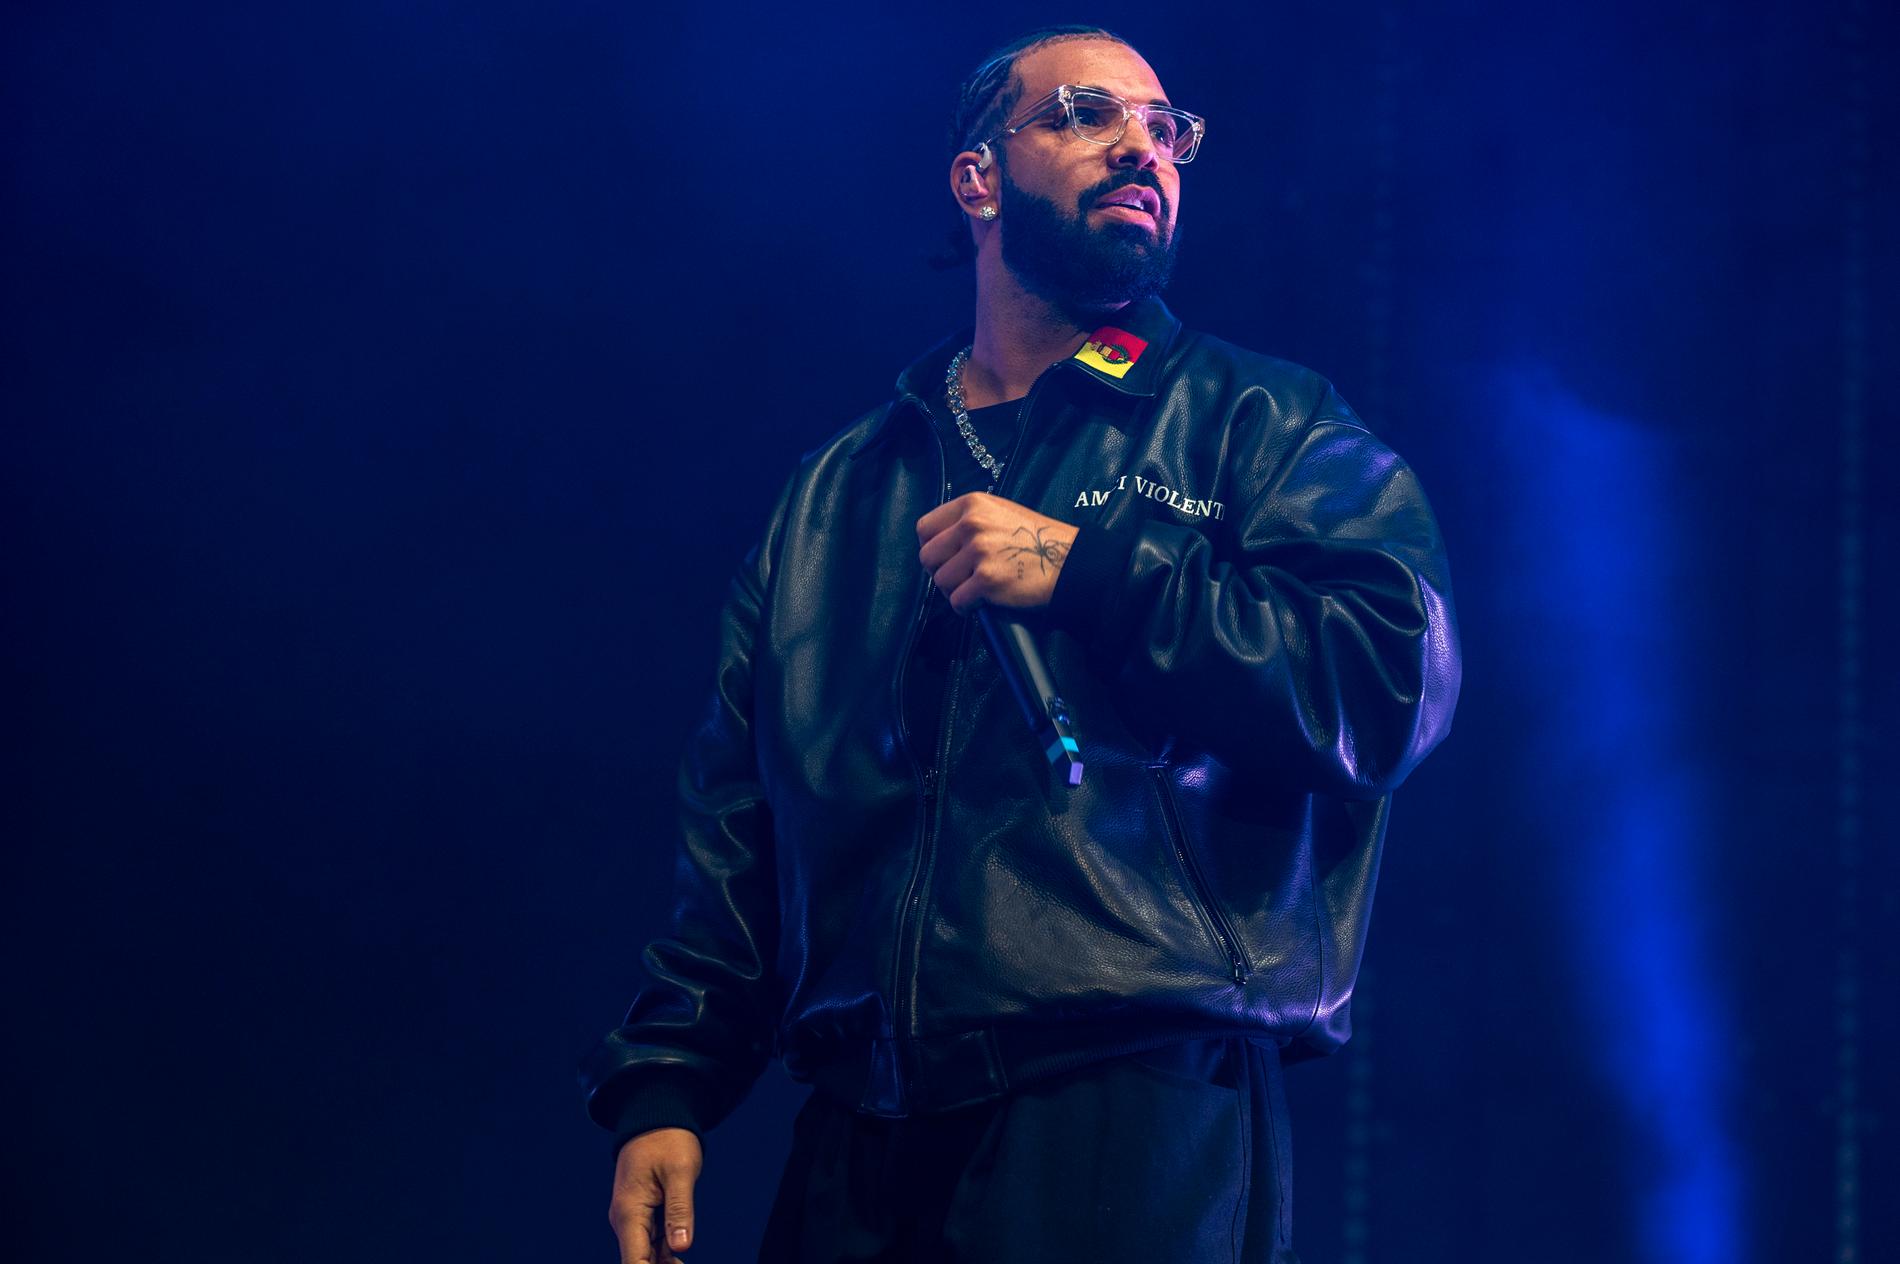 Den kanadensiska rapparen Drake.